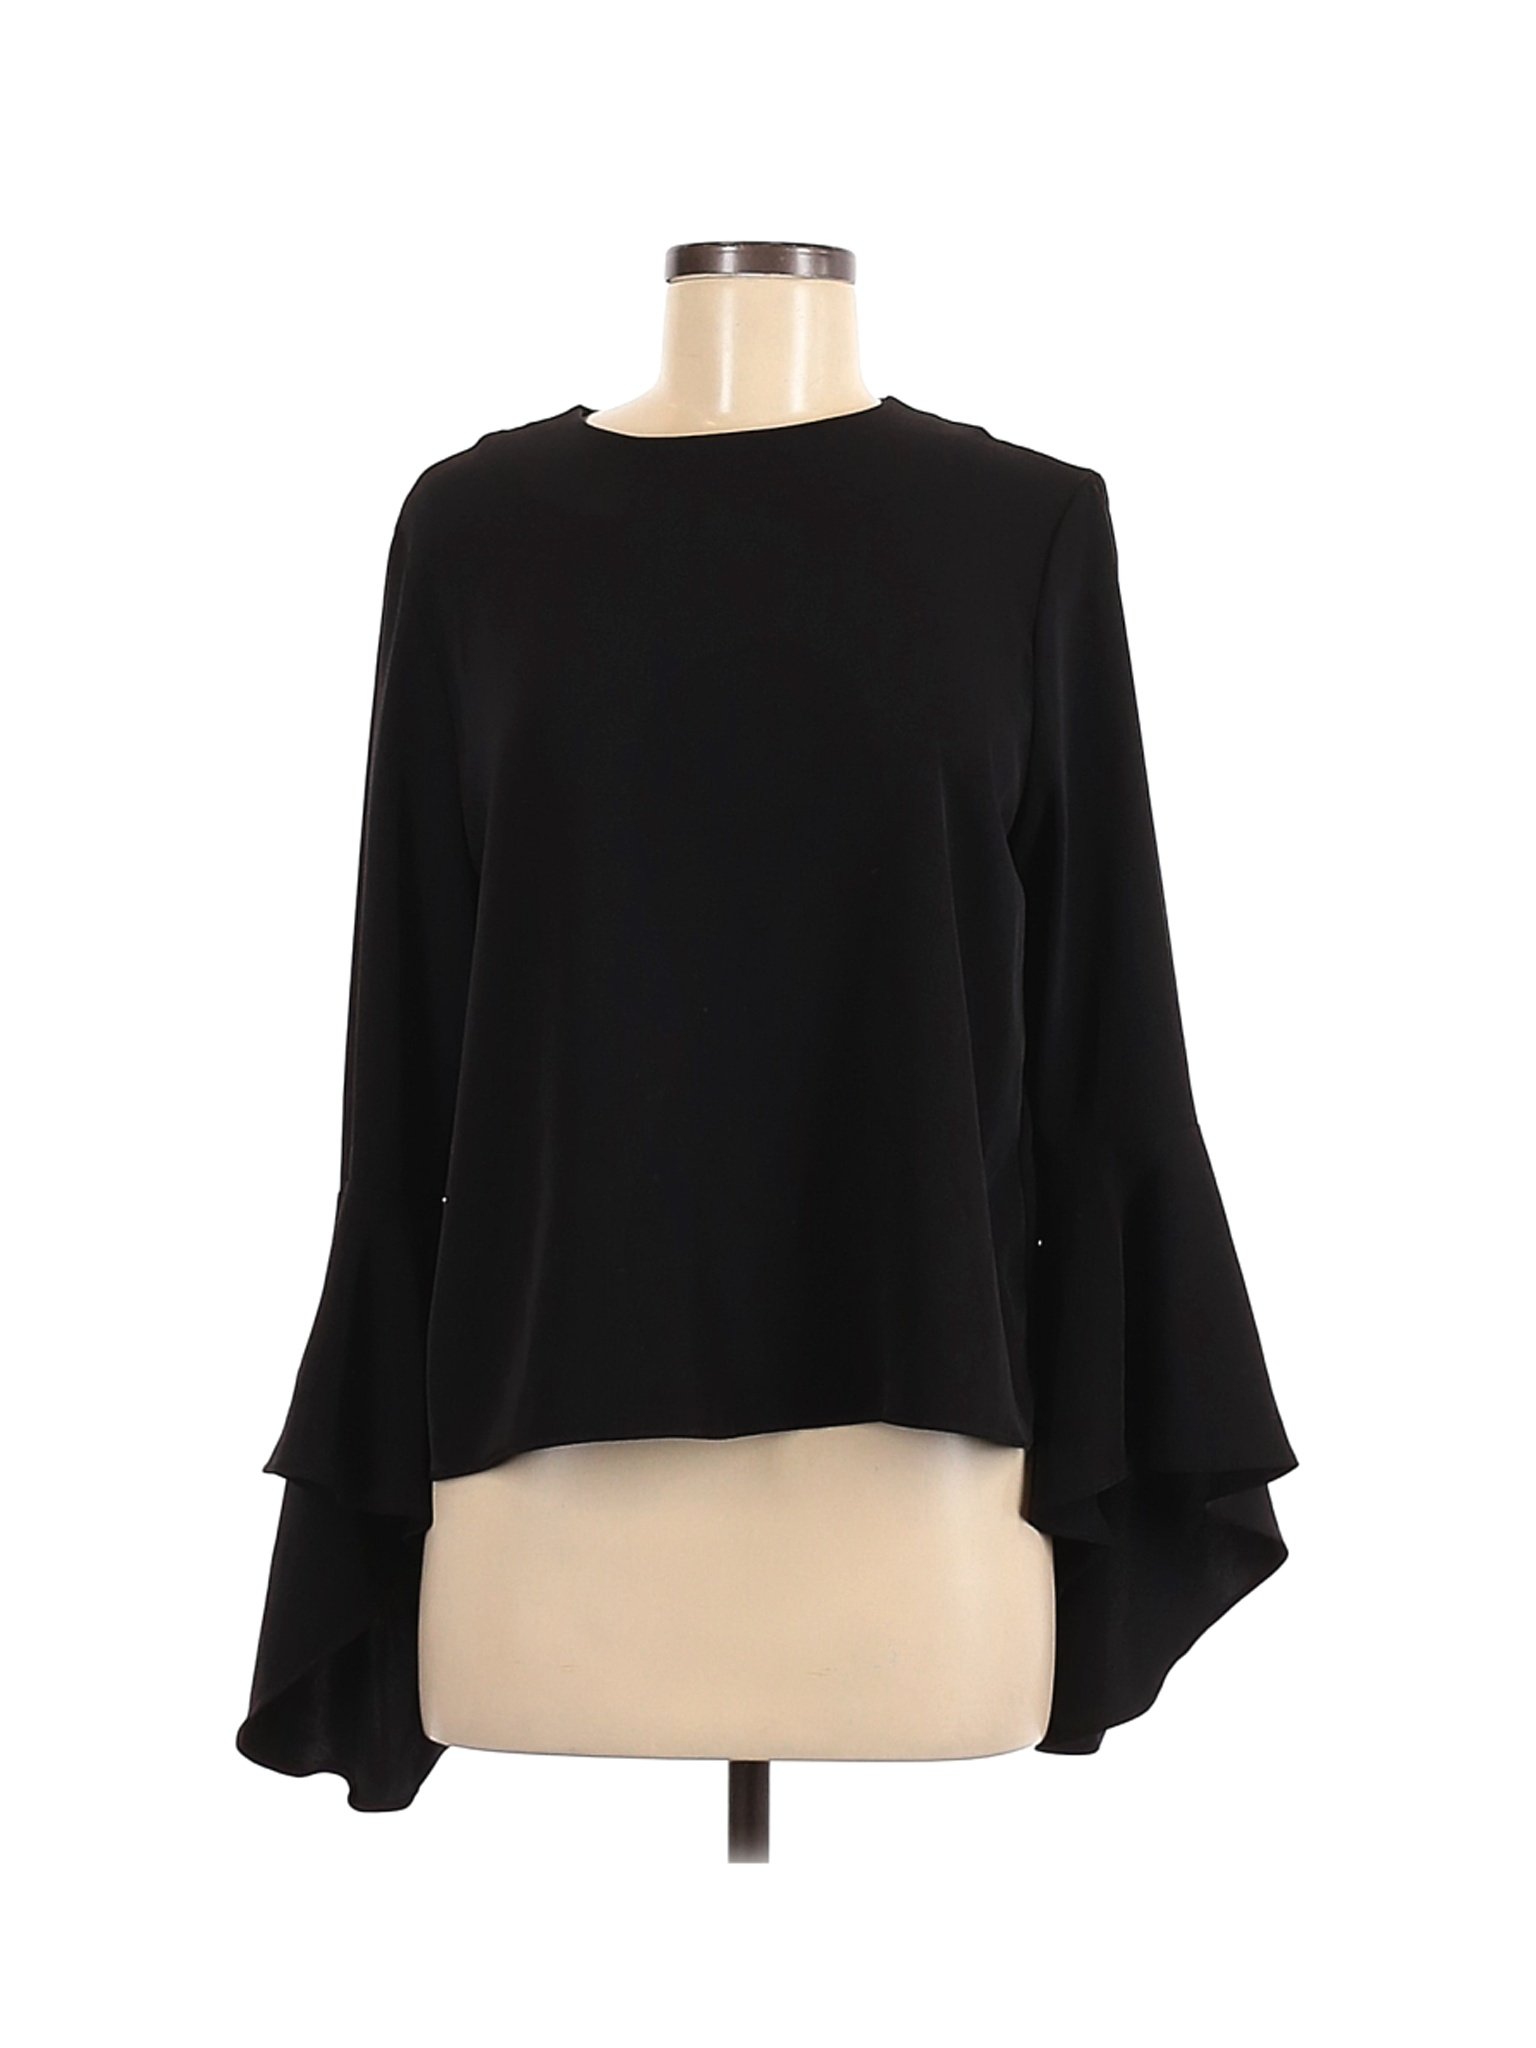 Catherine Women Black Long Sleeve Blouse M | eBay